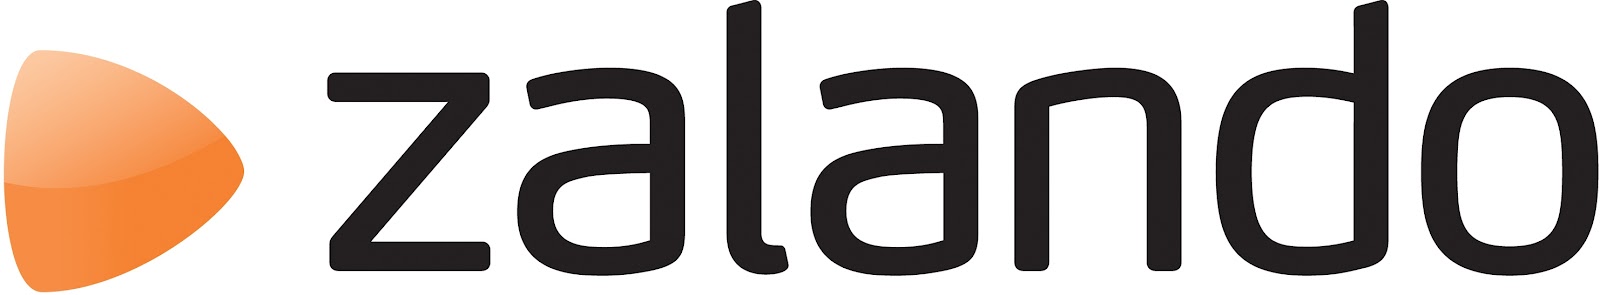 Alears Logo photo - 1